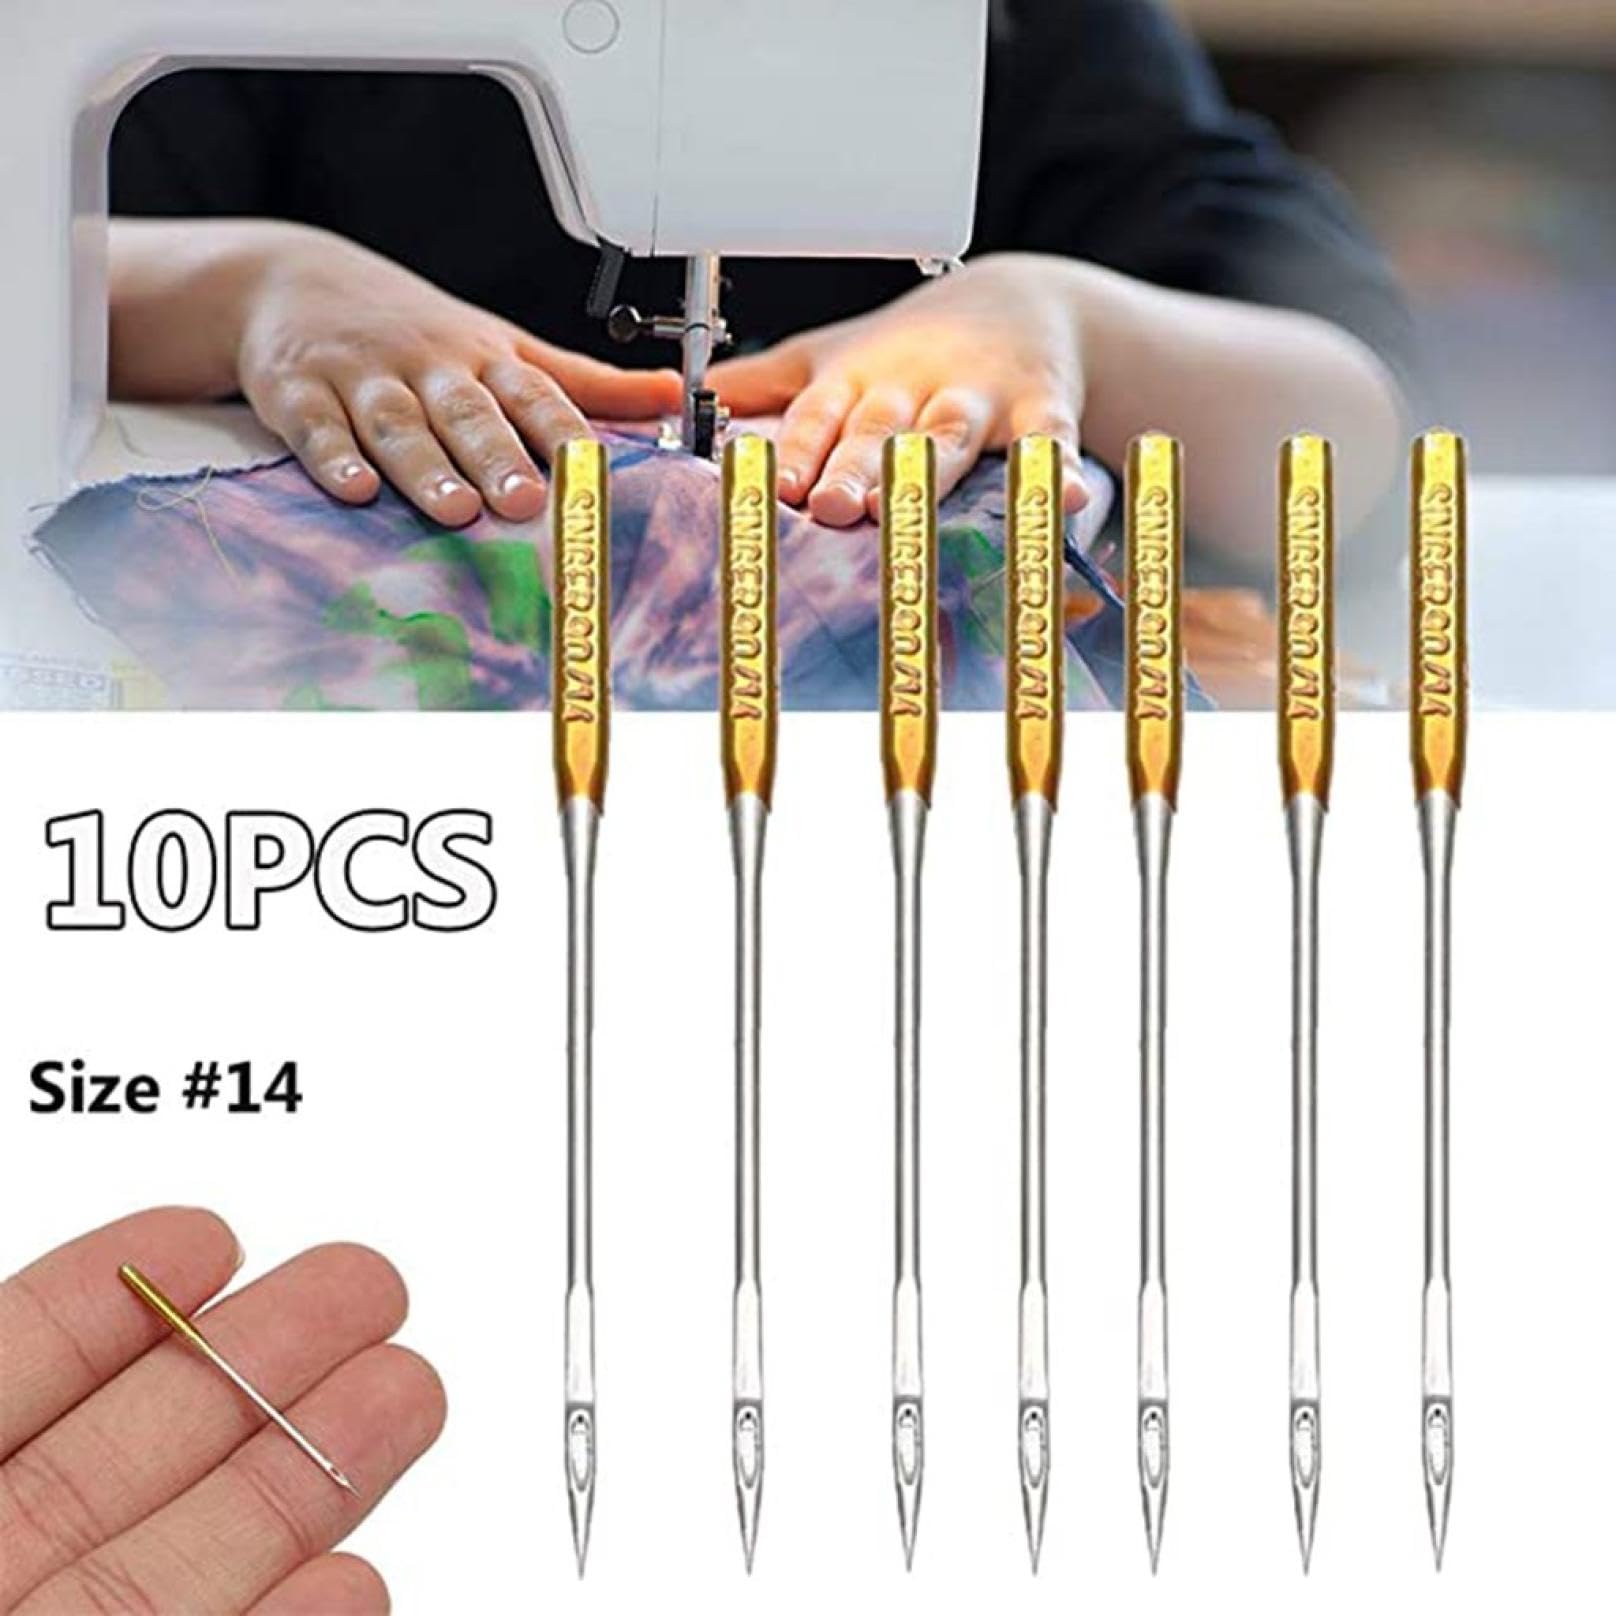 OCCOKO 10 PCS Universal Large Eye Sewing Machine Needles with 2 Threader (Size 14)